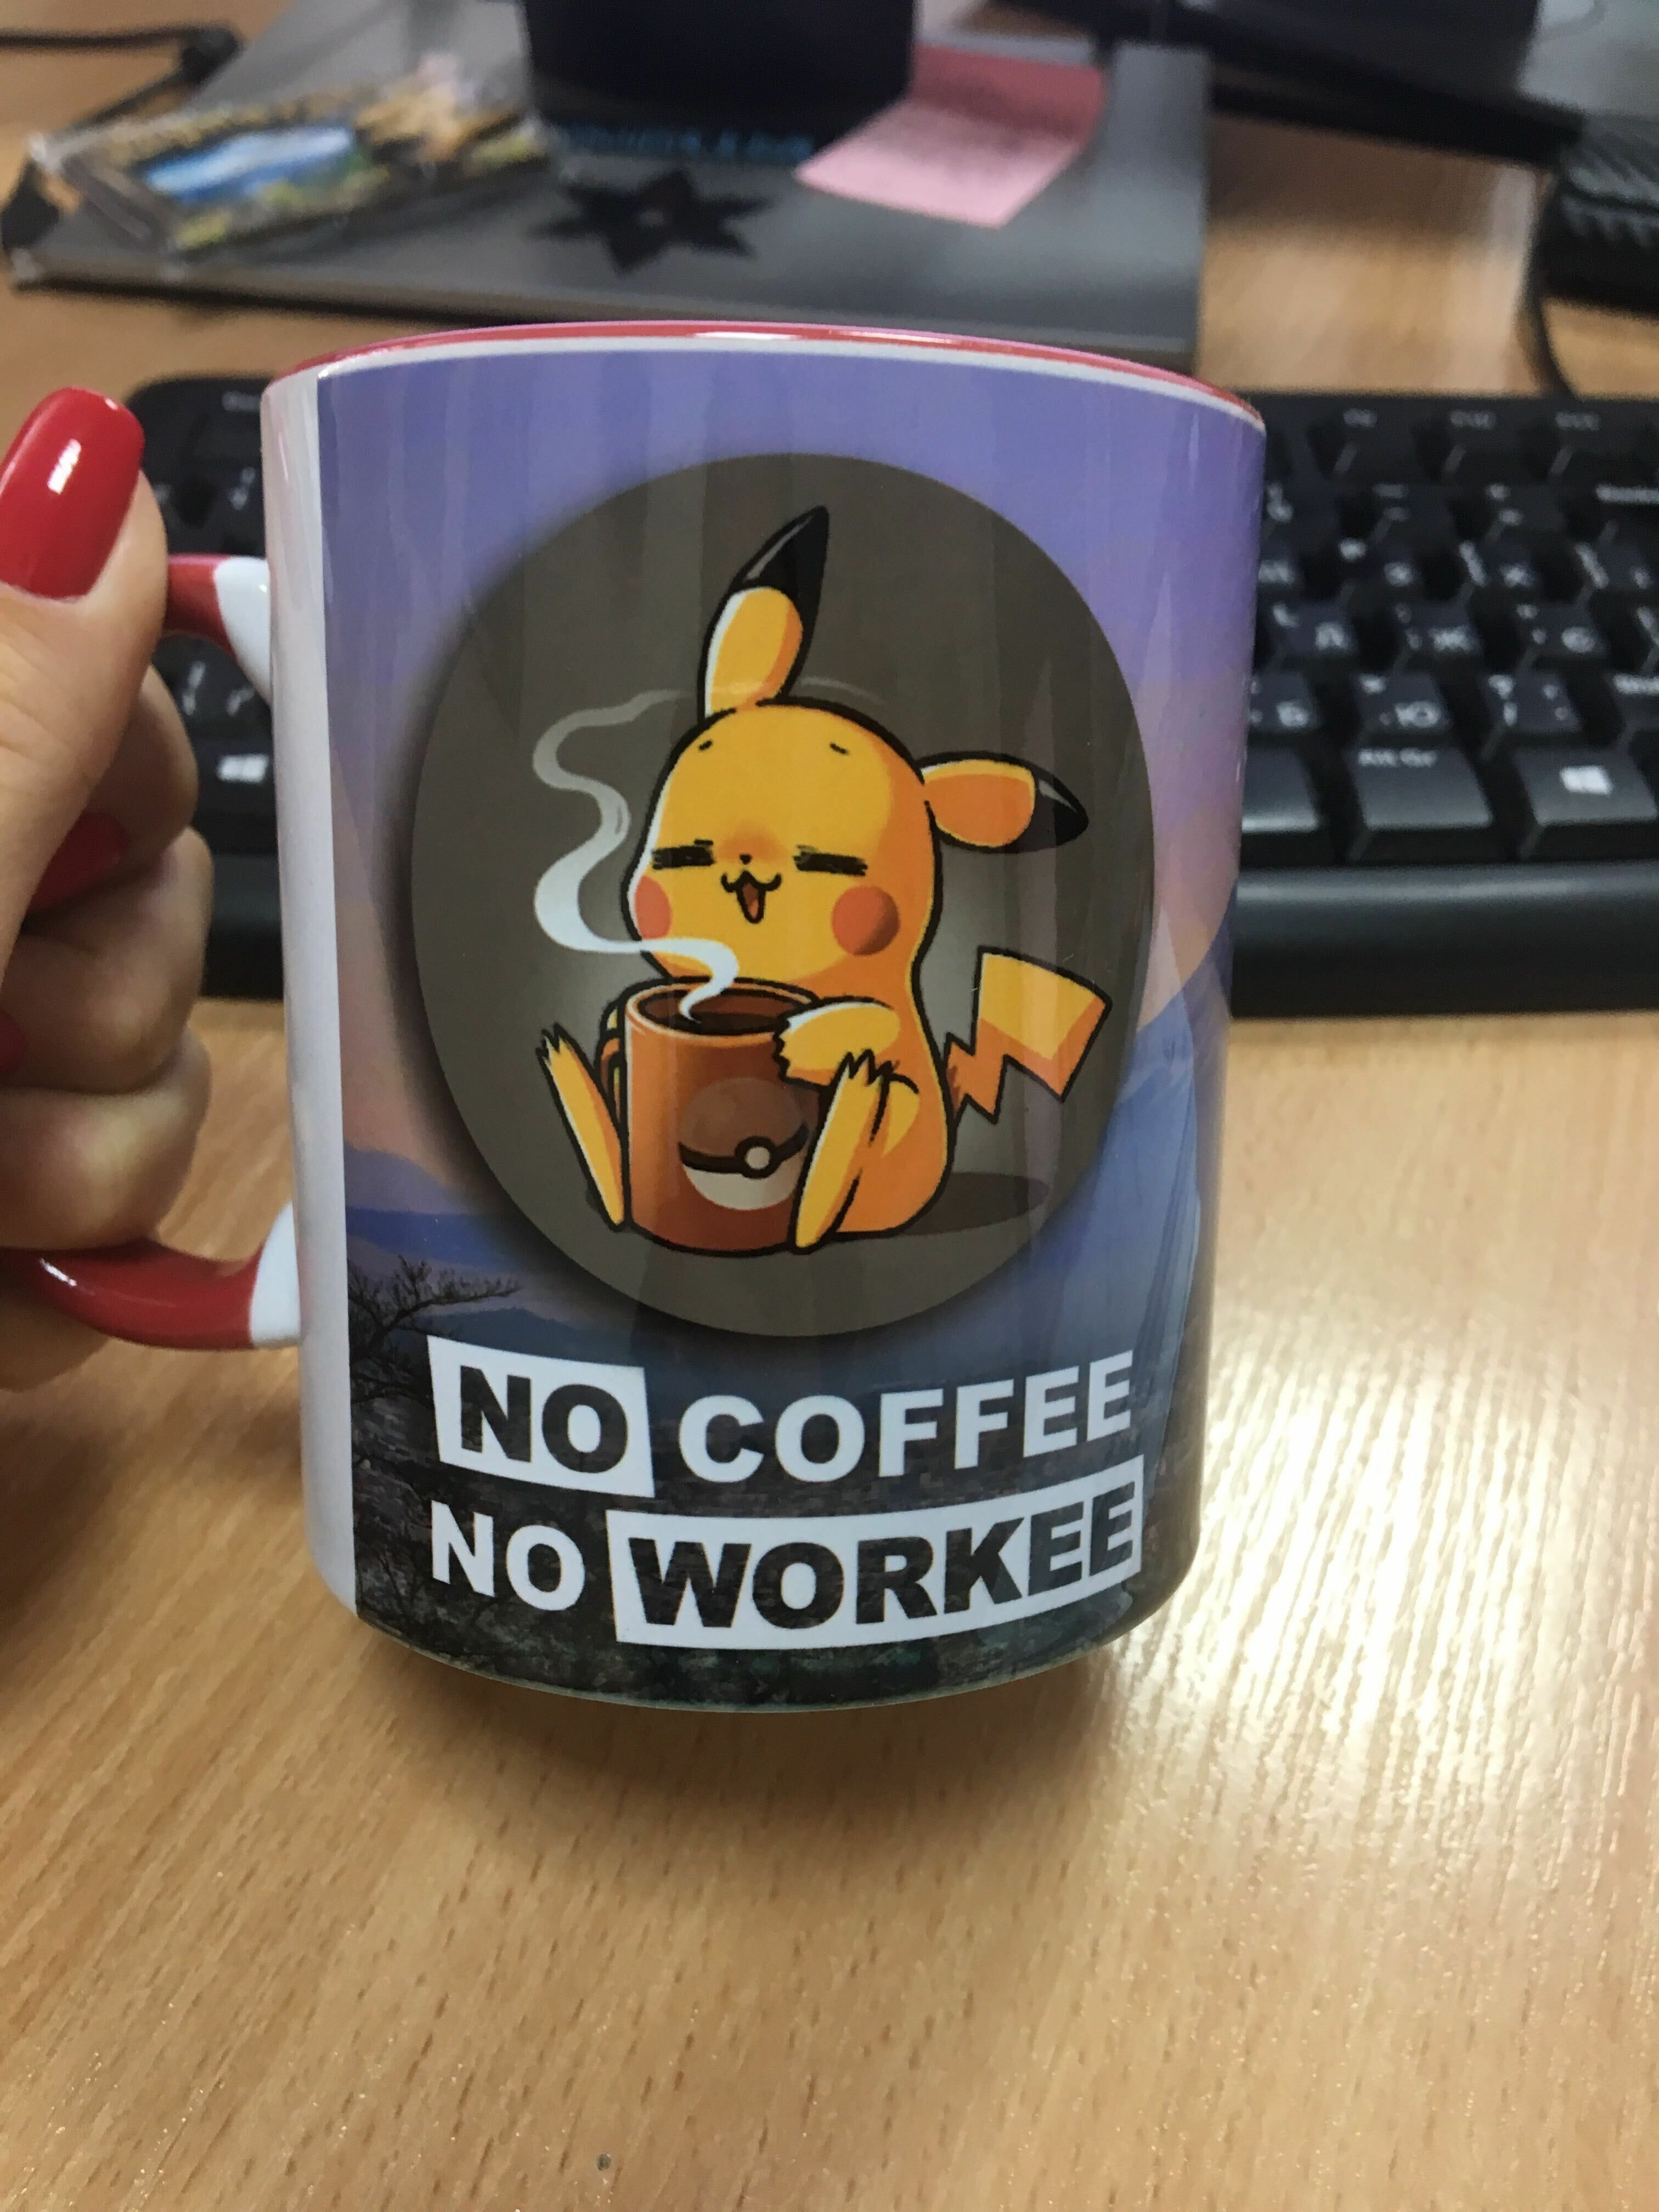 No coffee - no workee!